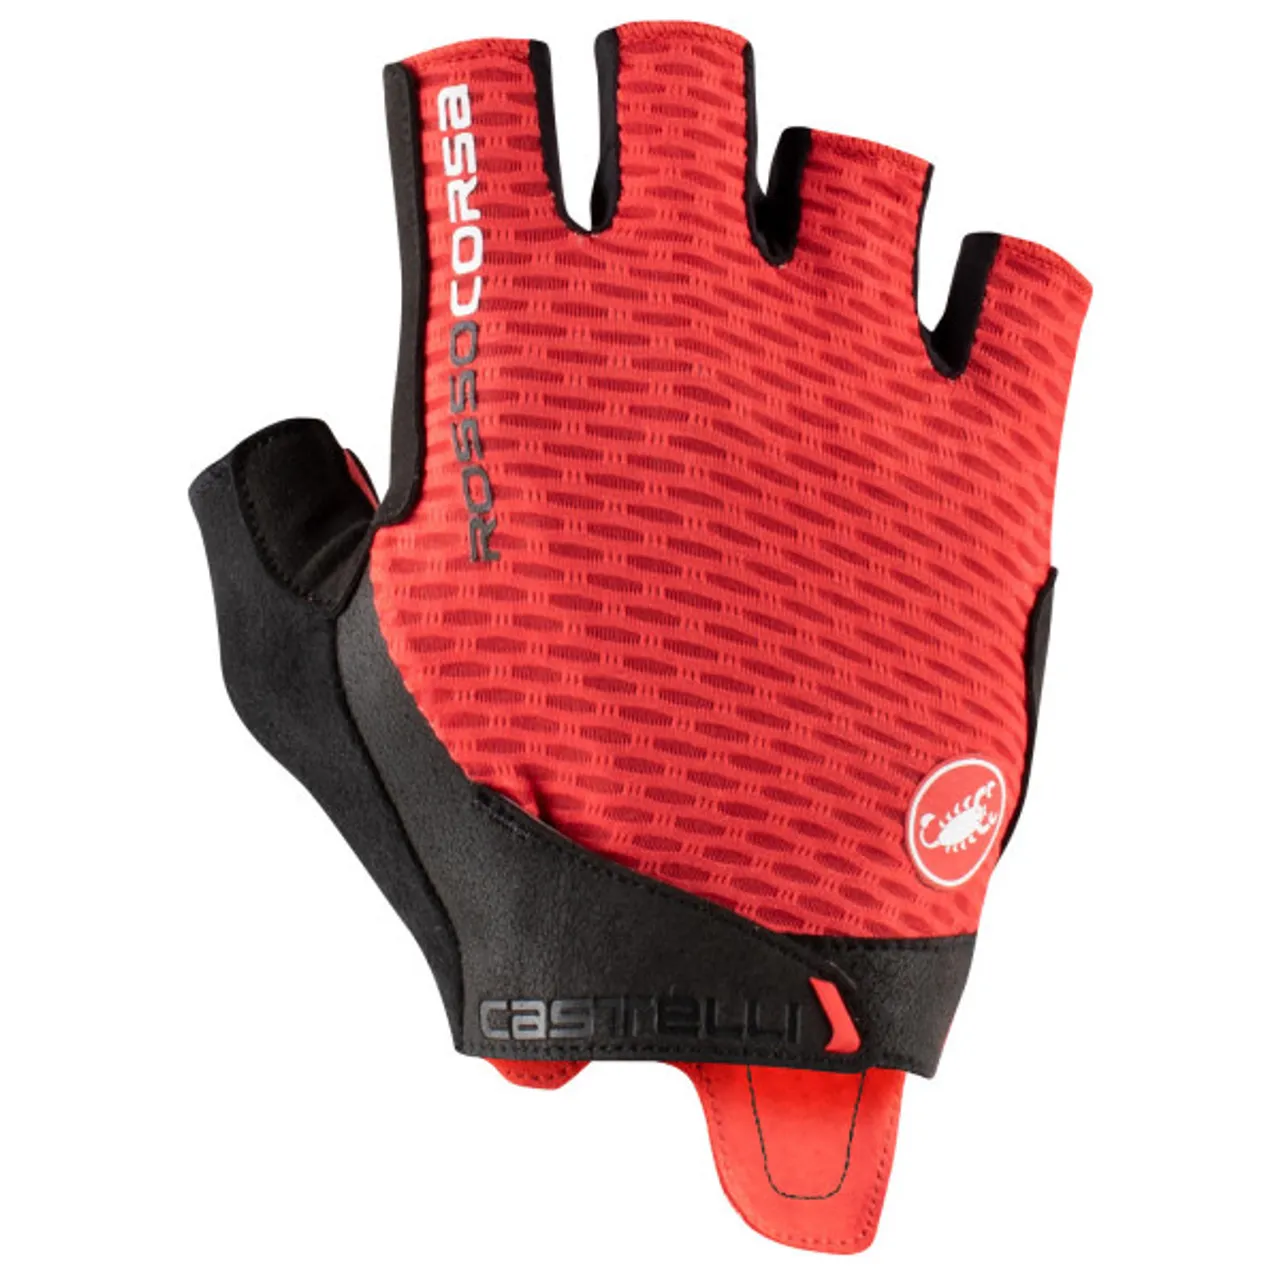 Castelli - Rosso Corsa Pro V Glove - Gloves